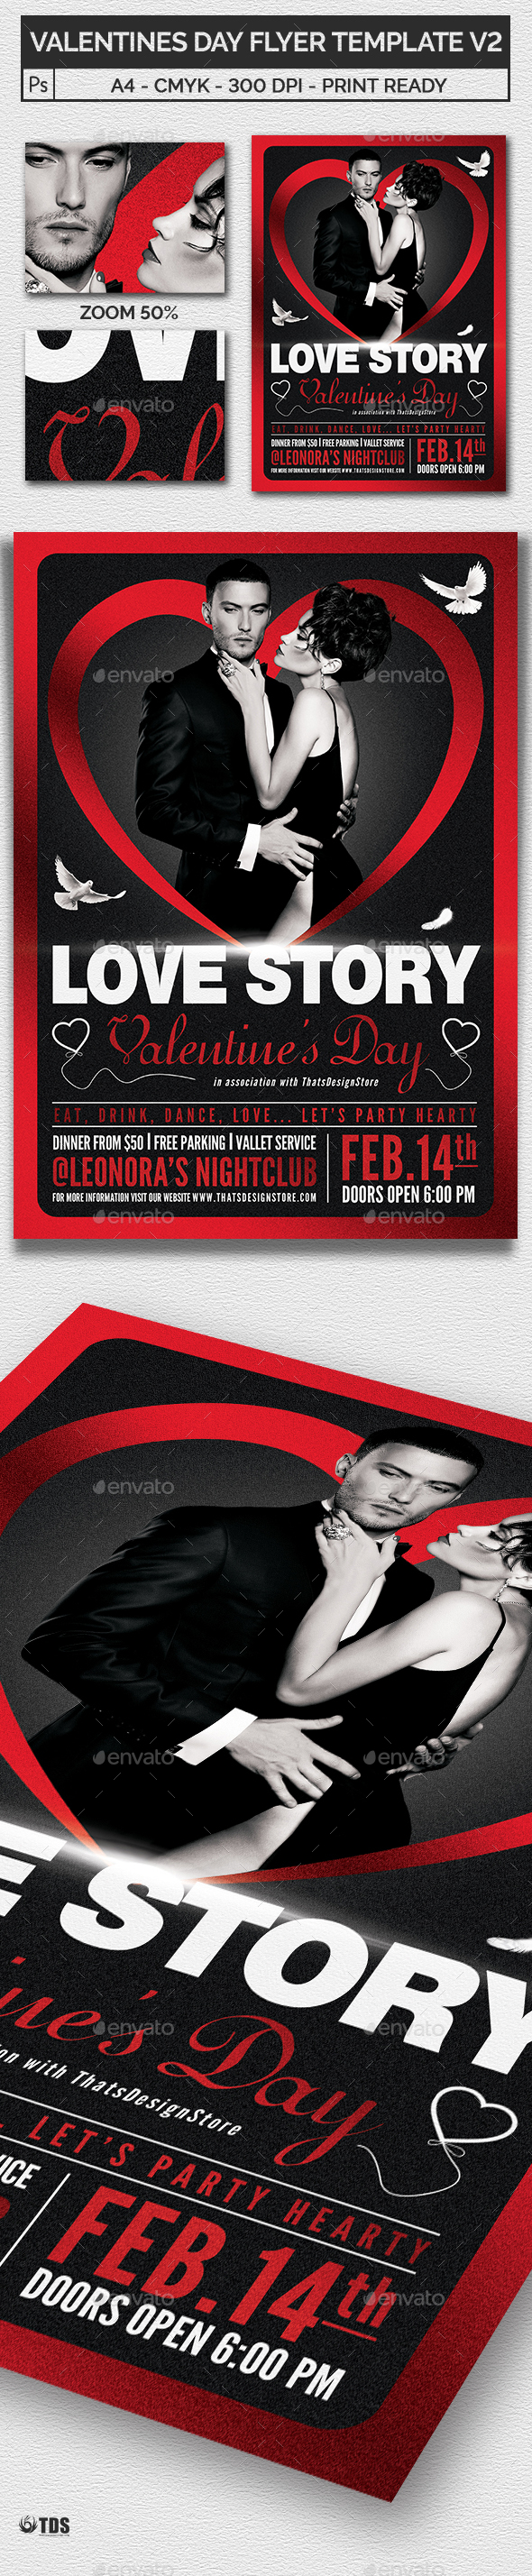 Valentines Day Flyer Template V2